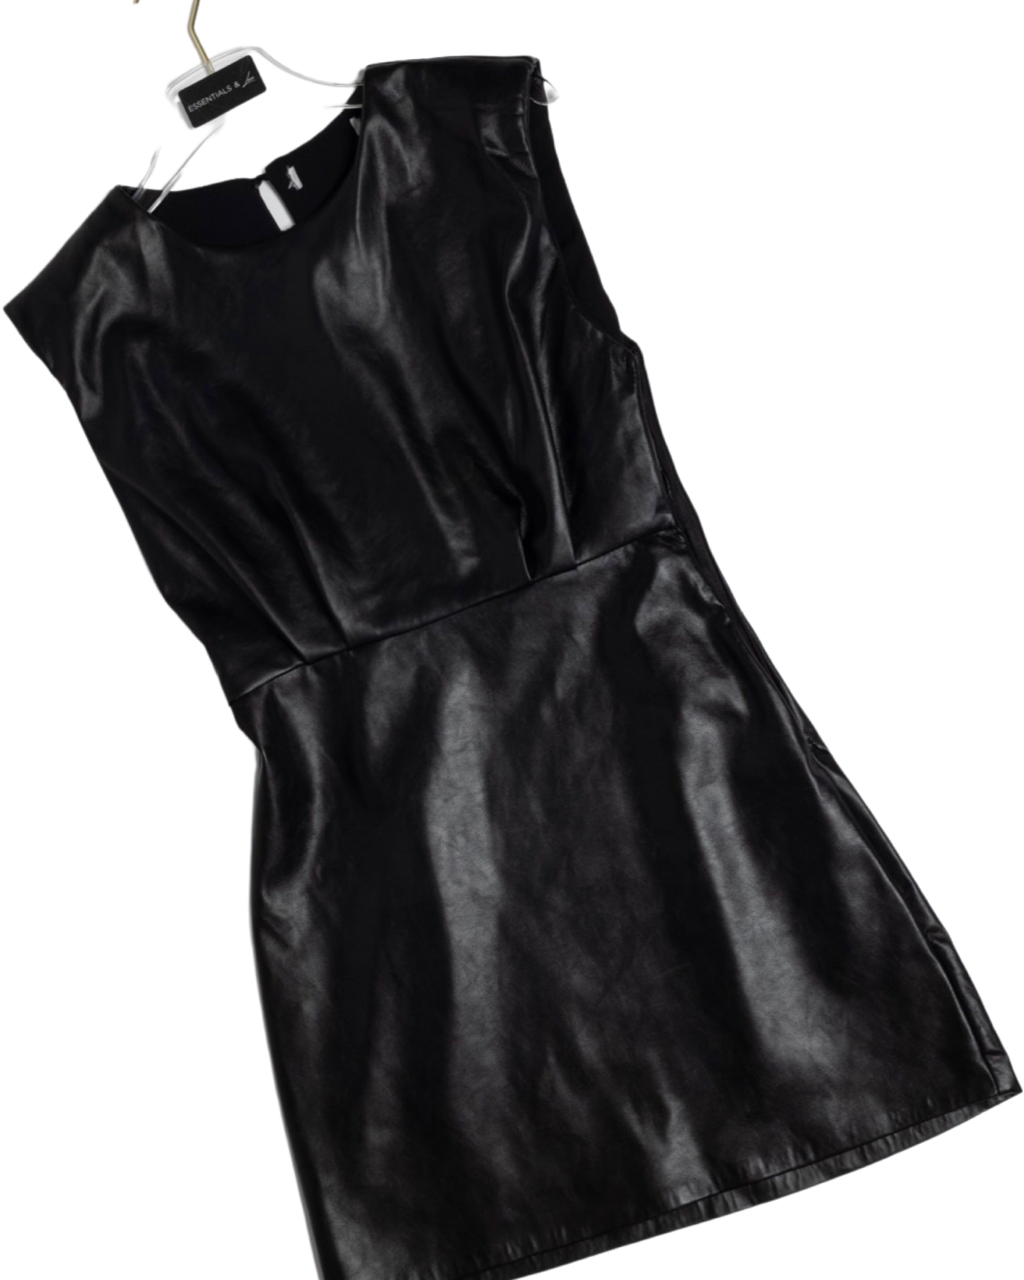 Black Vegan Leather Dress - Sleeveless Dress - A-Line Mini Dress